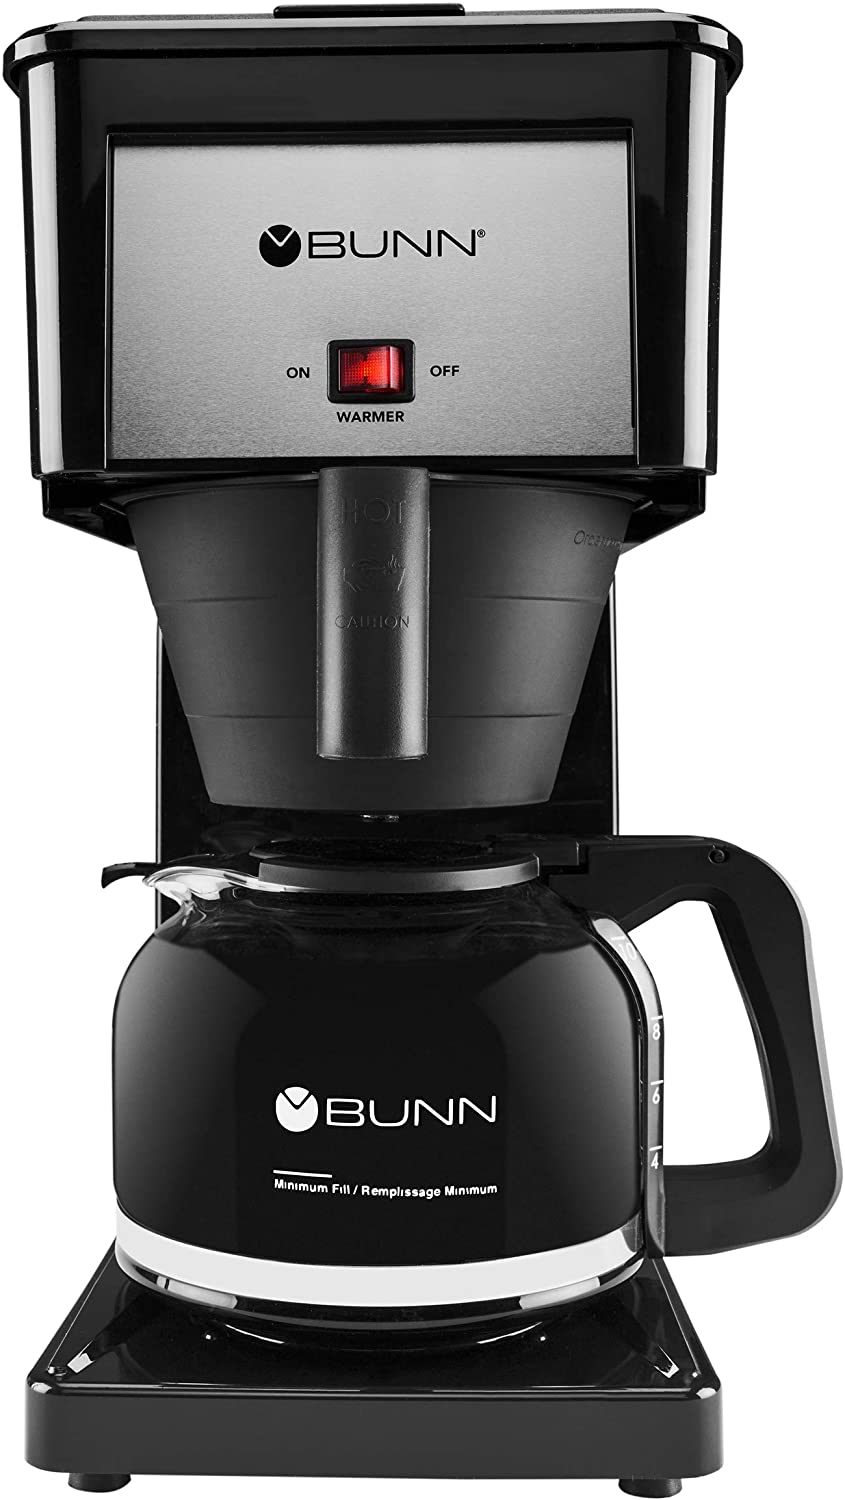 Bunn 10-Cup Home Coffee Maker, Black (GRB)